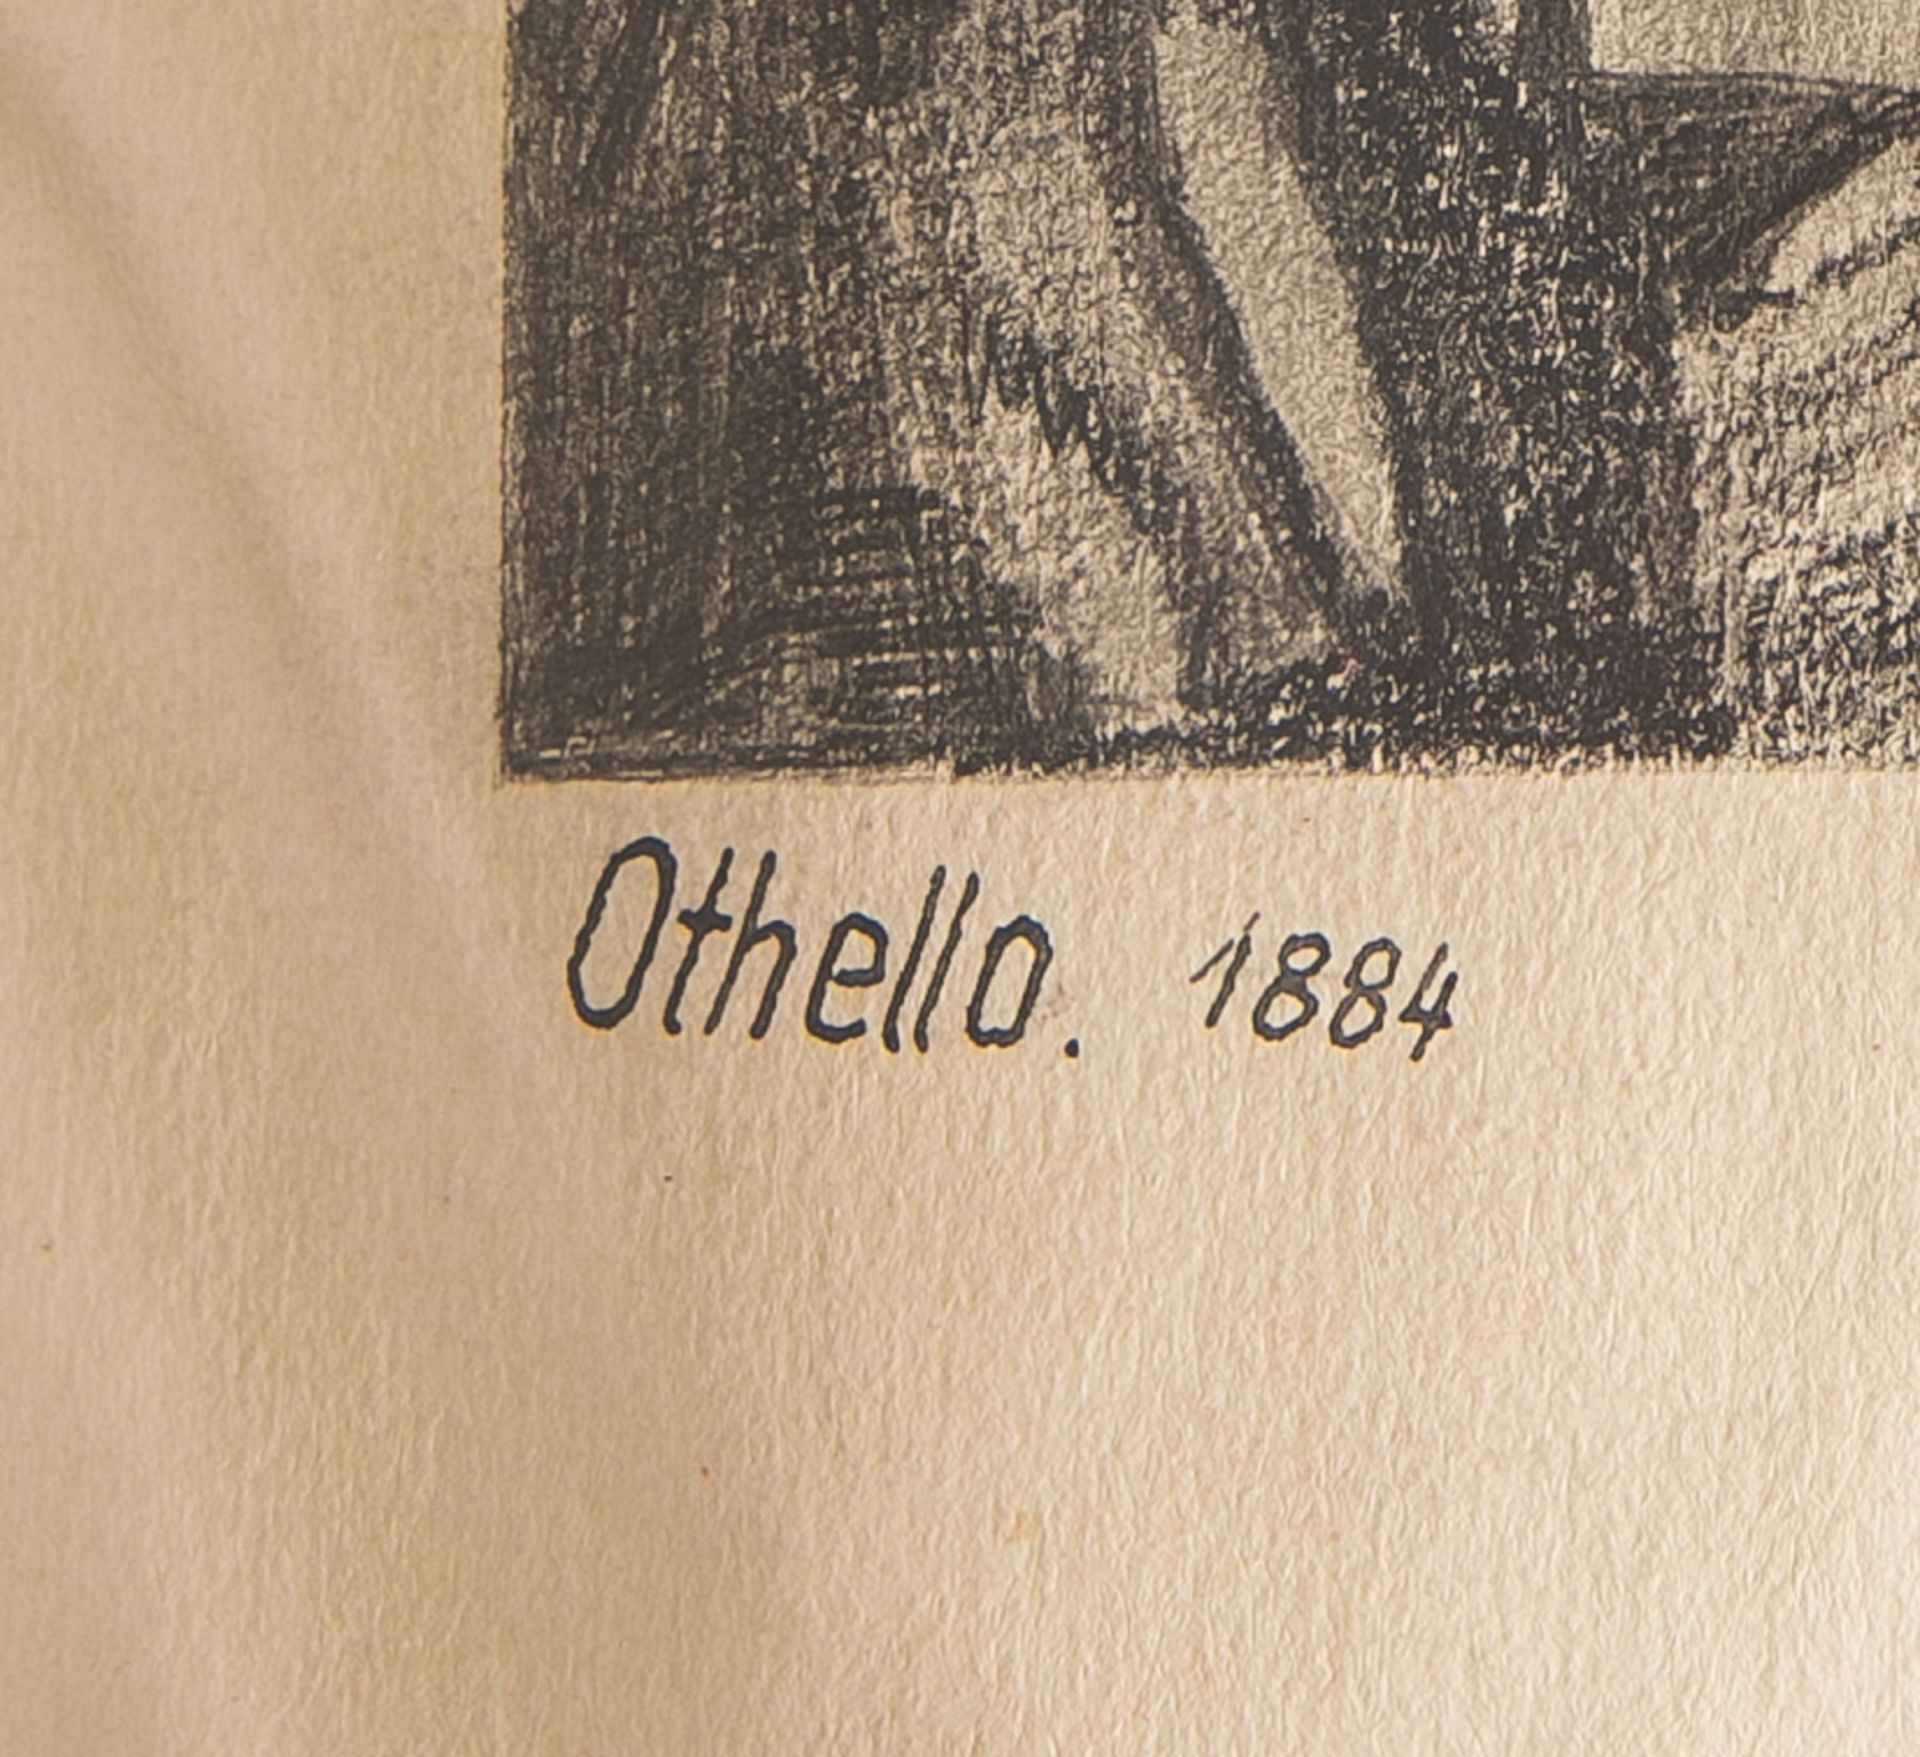 Corinth, Lovis (1858 - 1925), "Othello" (1884) - Image 2 of 2